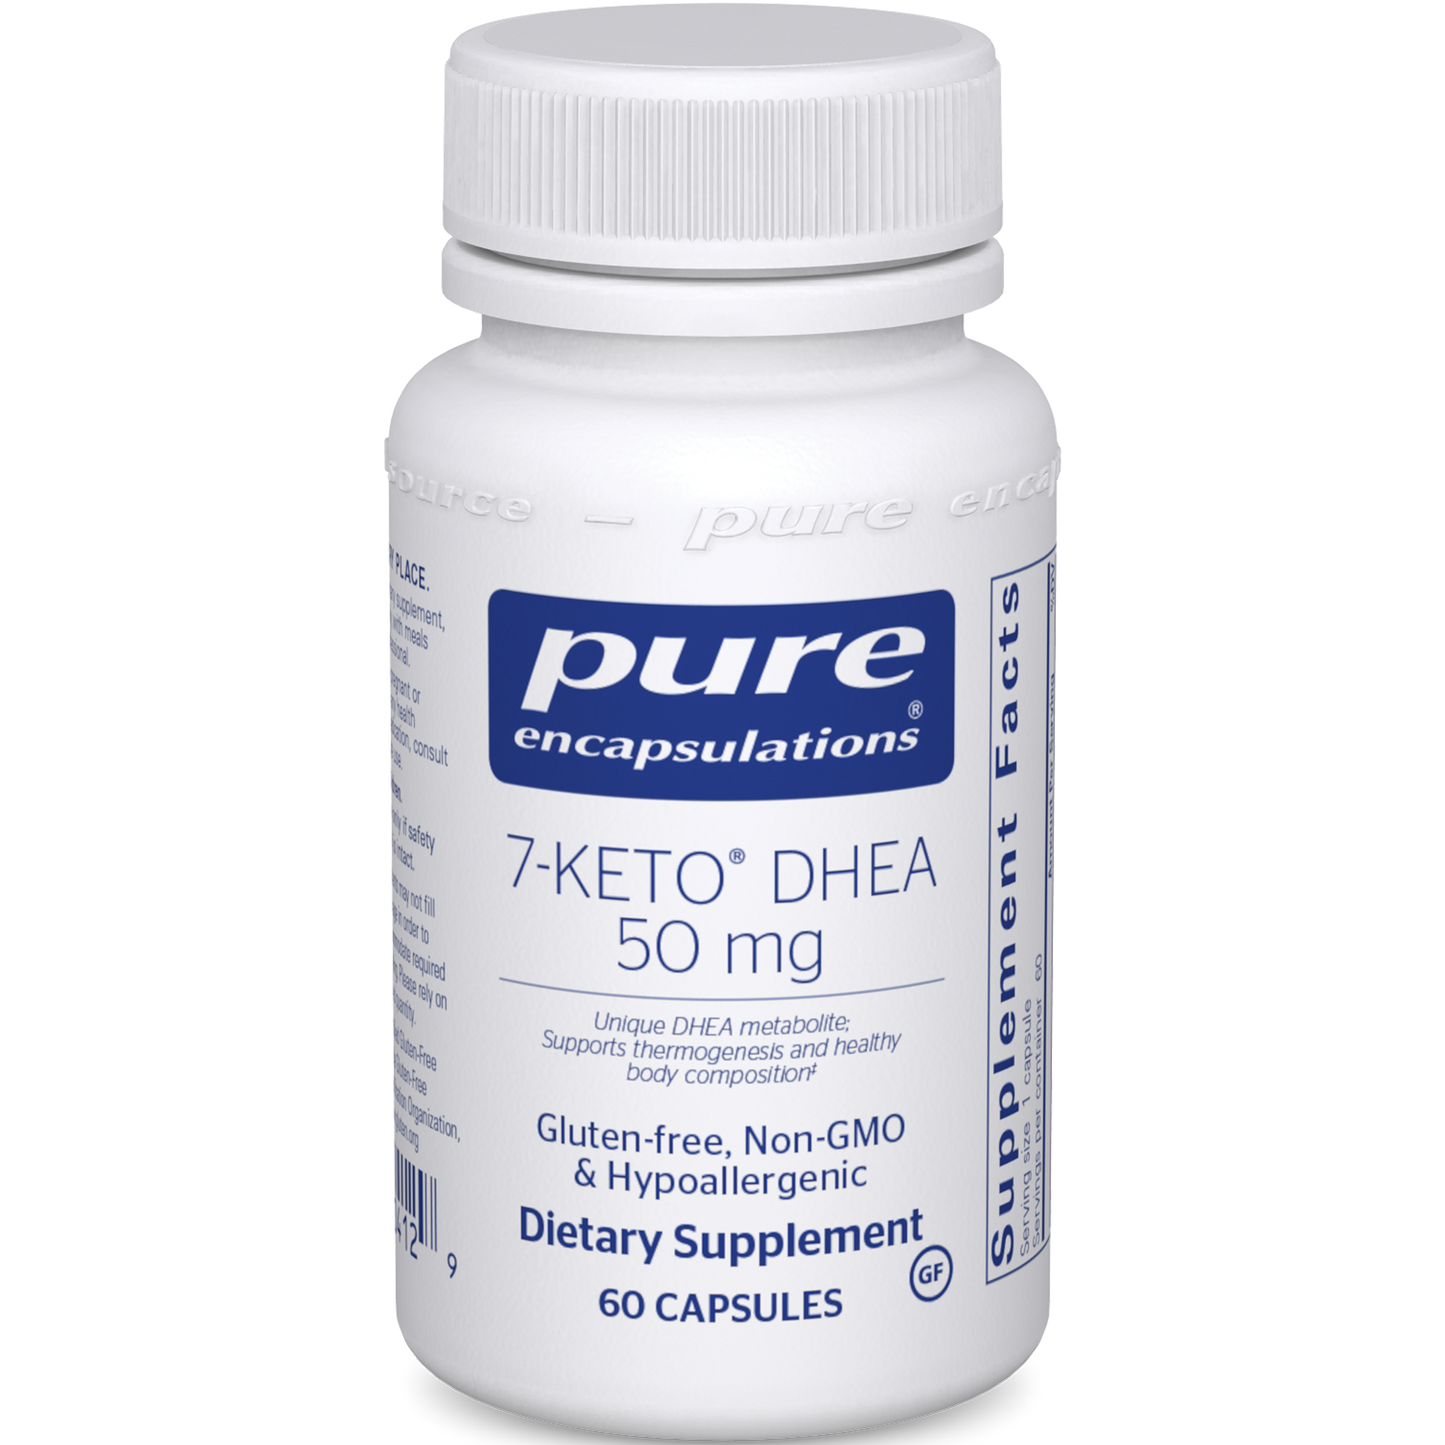 7-KETO® DHEA 50 mg